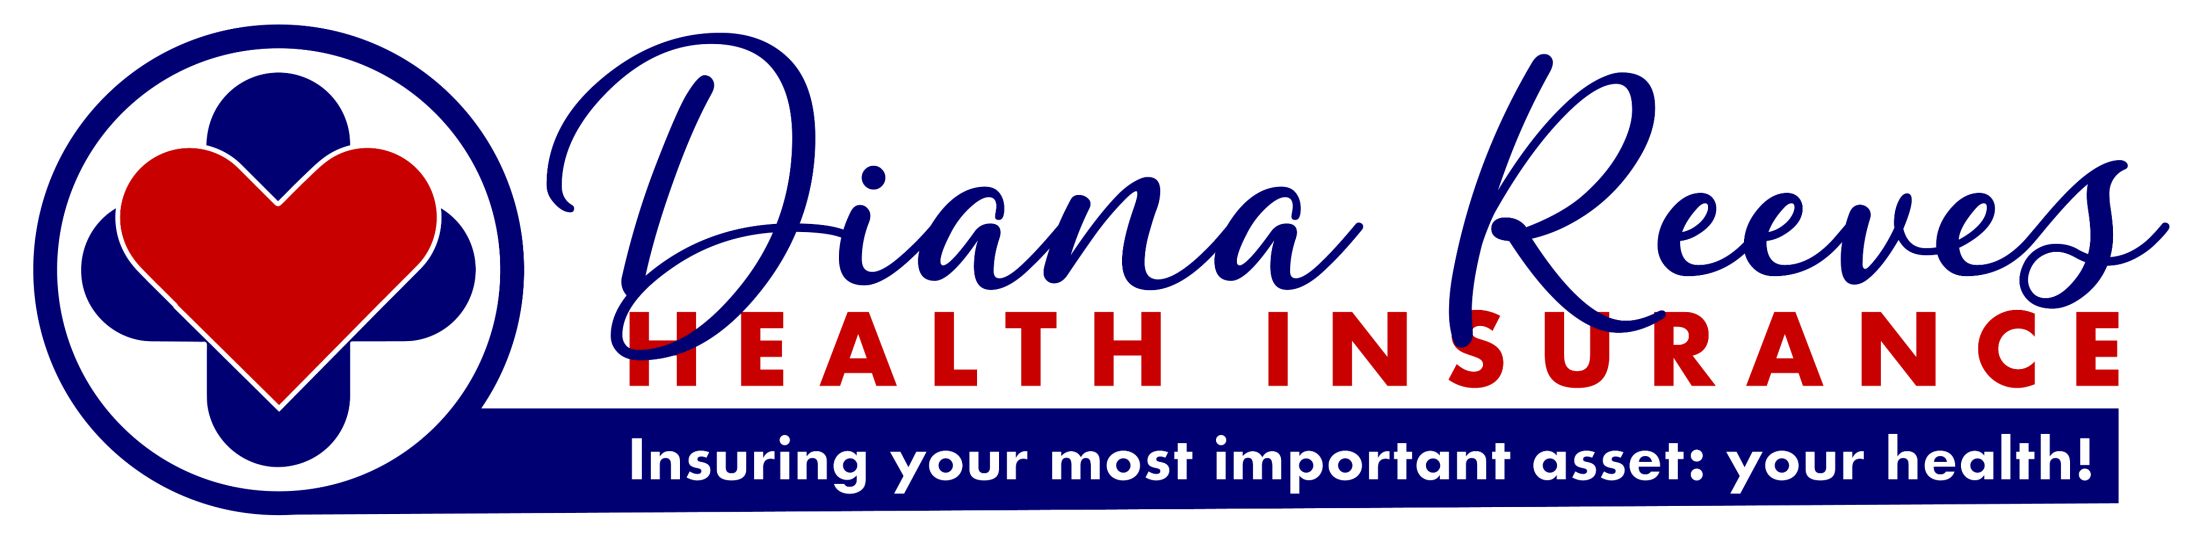 Diana Reeves Health Insurance